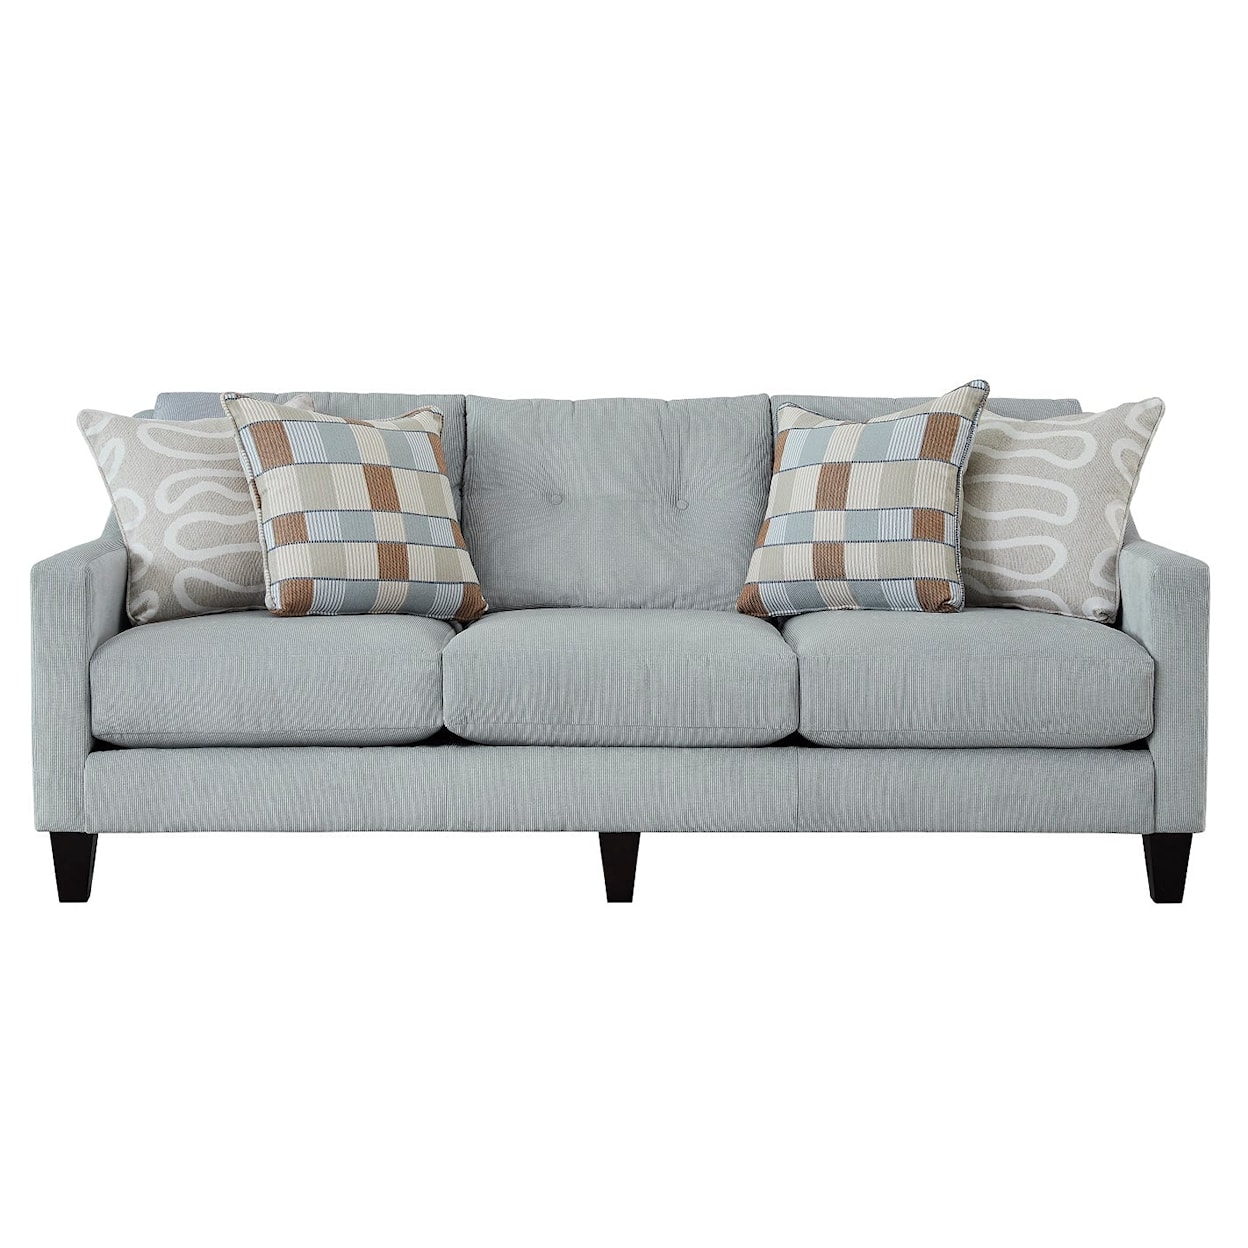 Fusion Furniture 5007B NOLA ARTIC Sofa